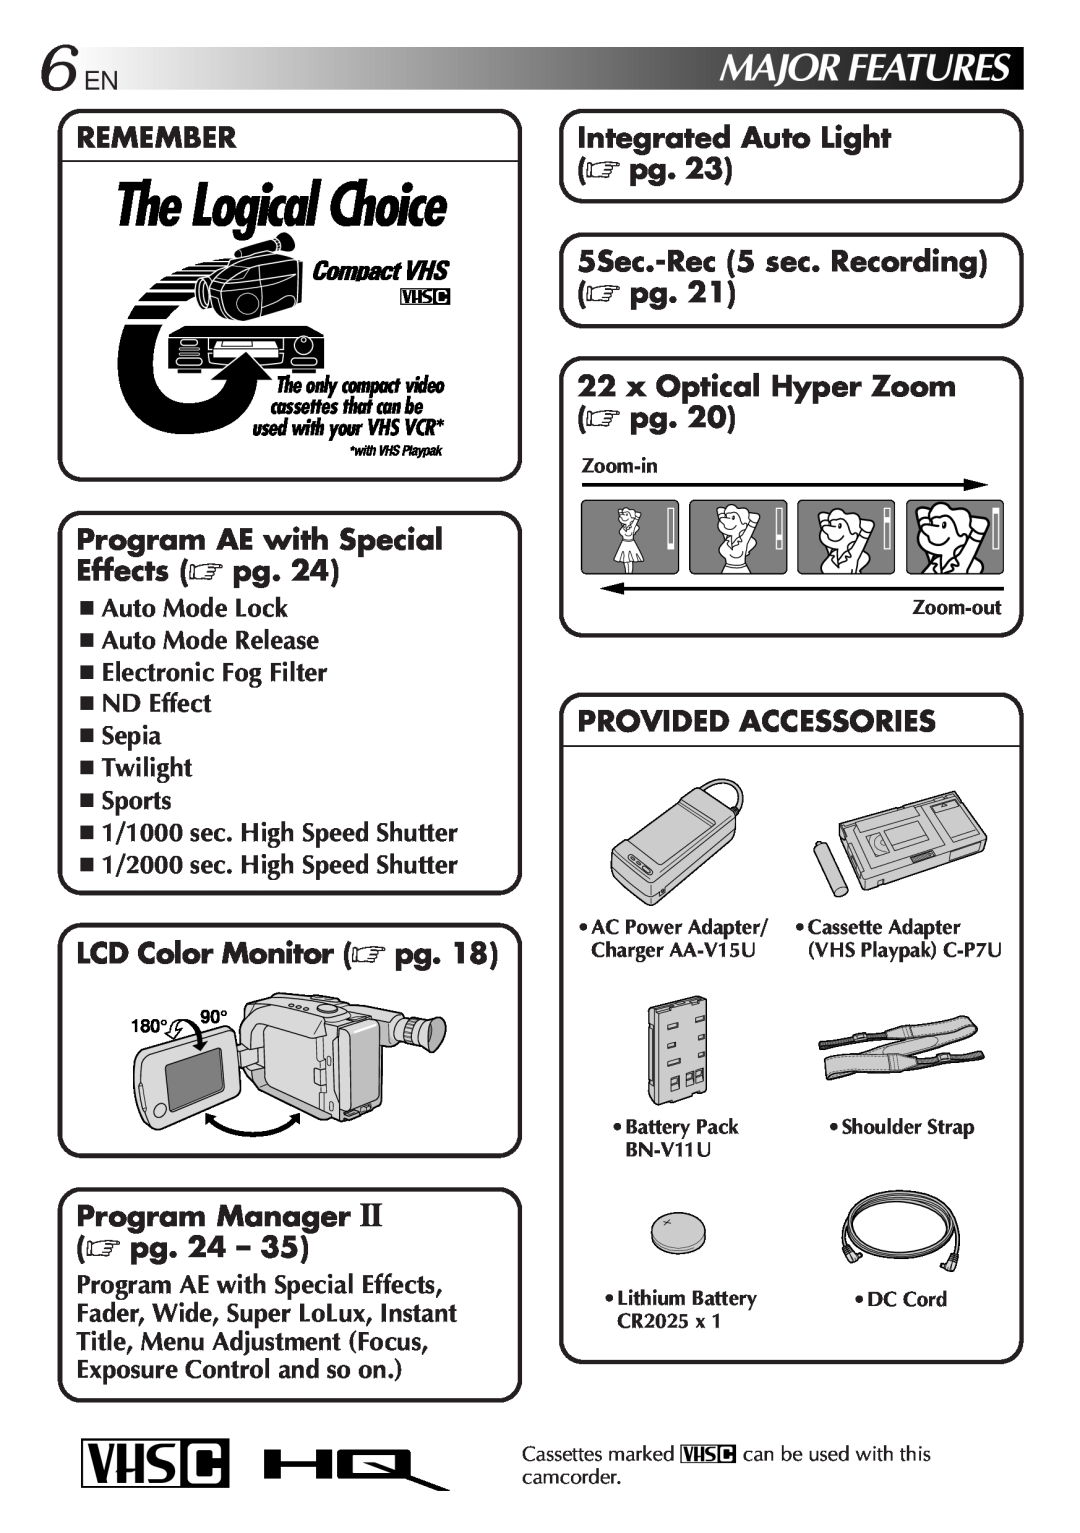 JVC GR-AXM100 manual The Logical Choice, Major Features, Remember, Integrated Auto Light, 5Sec.-Rec 5 sec. Recording pg 